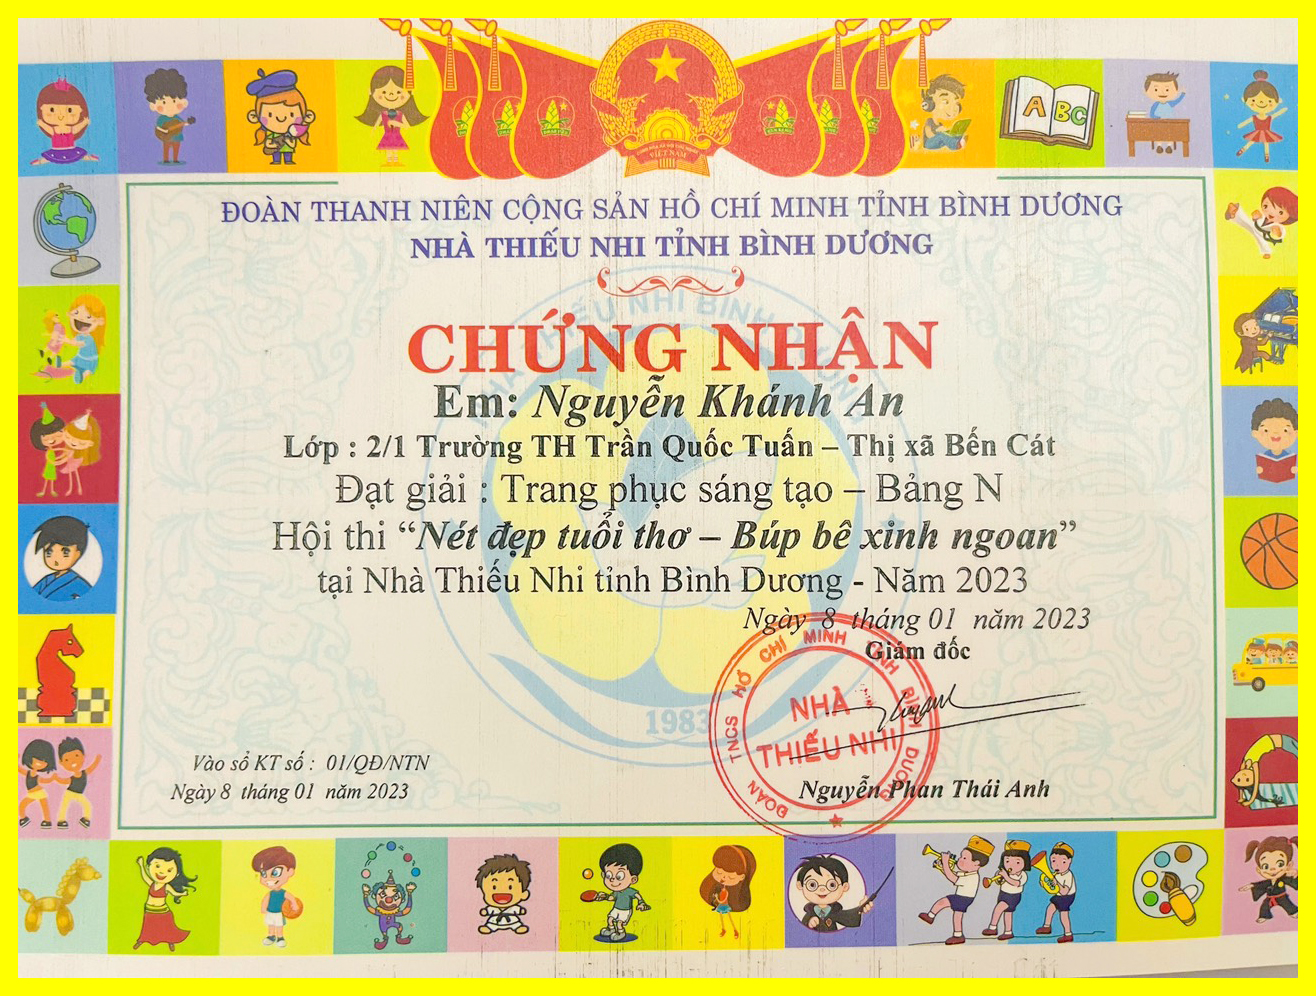 Chung nhan Khanh An 2 1